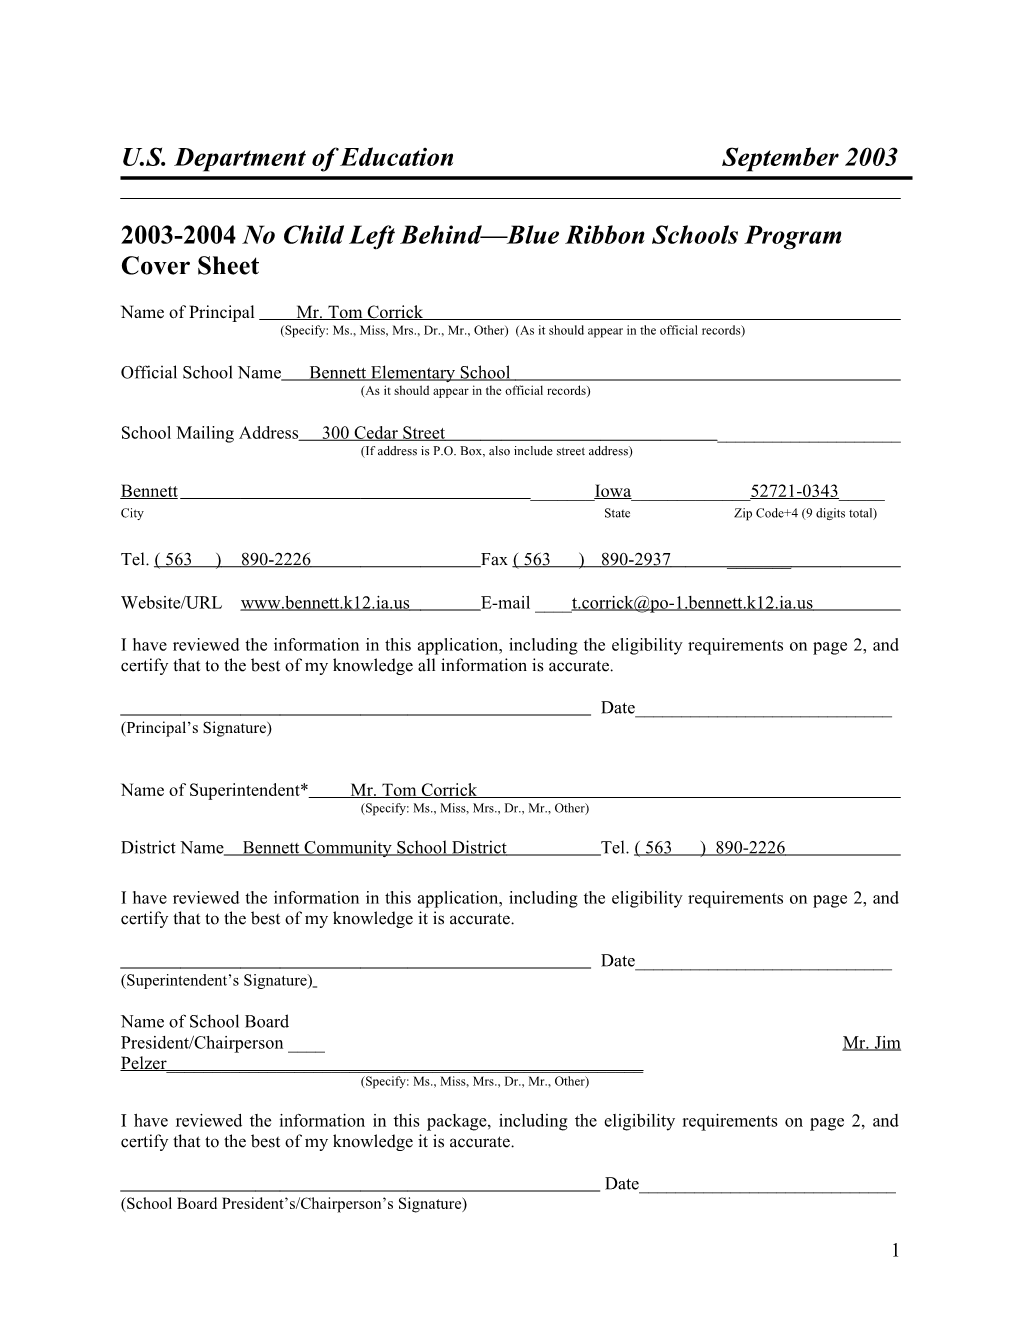 Bennett Elementary School 2004 No Child Left Behind-Blue Ribbon School Application (Msword)